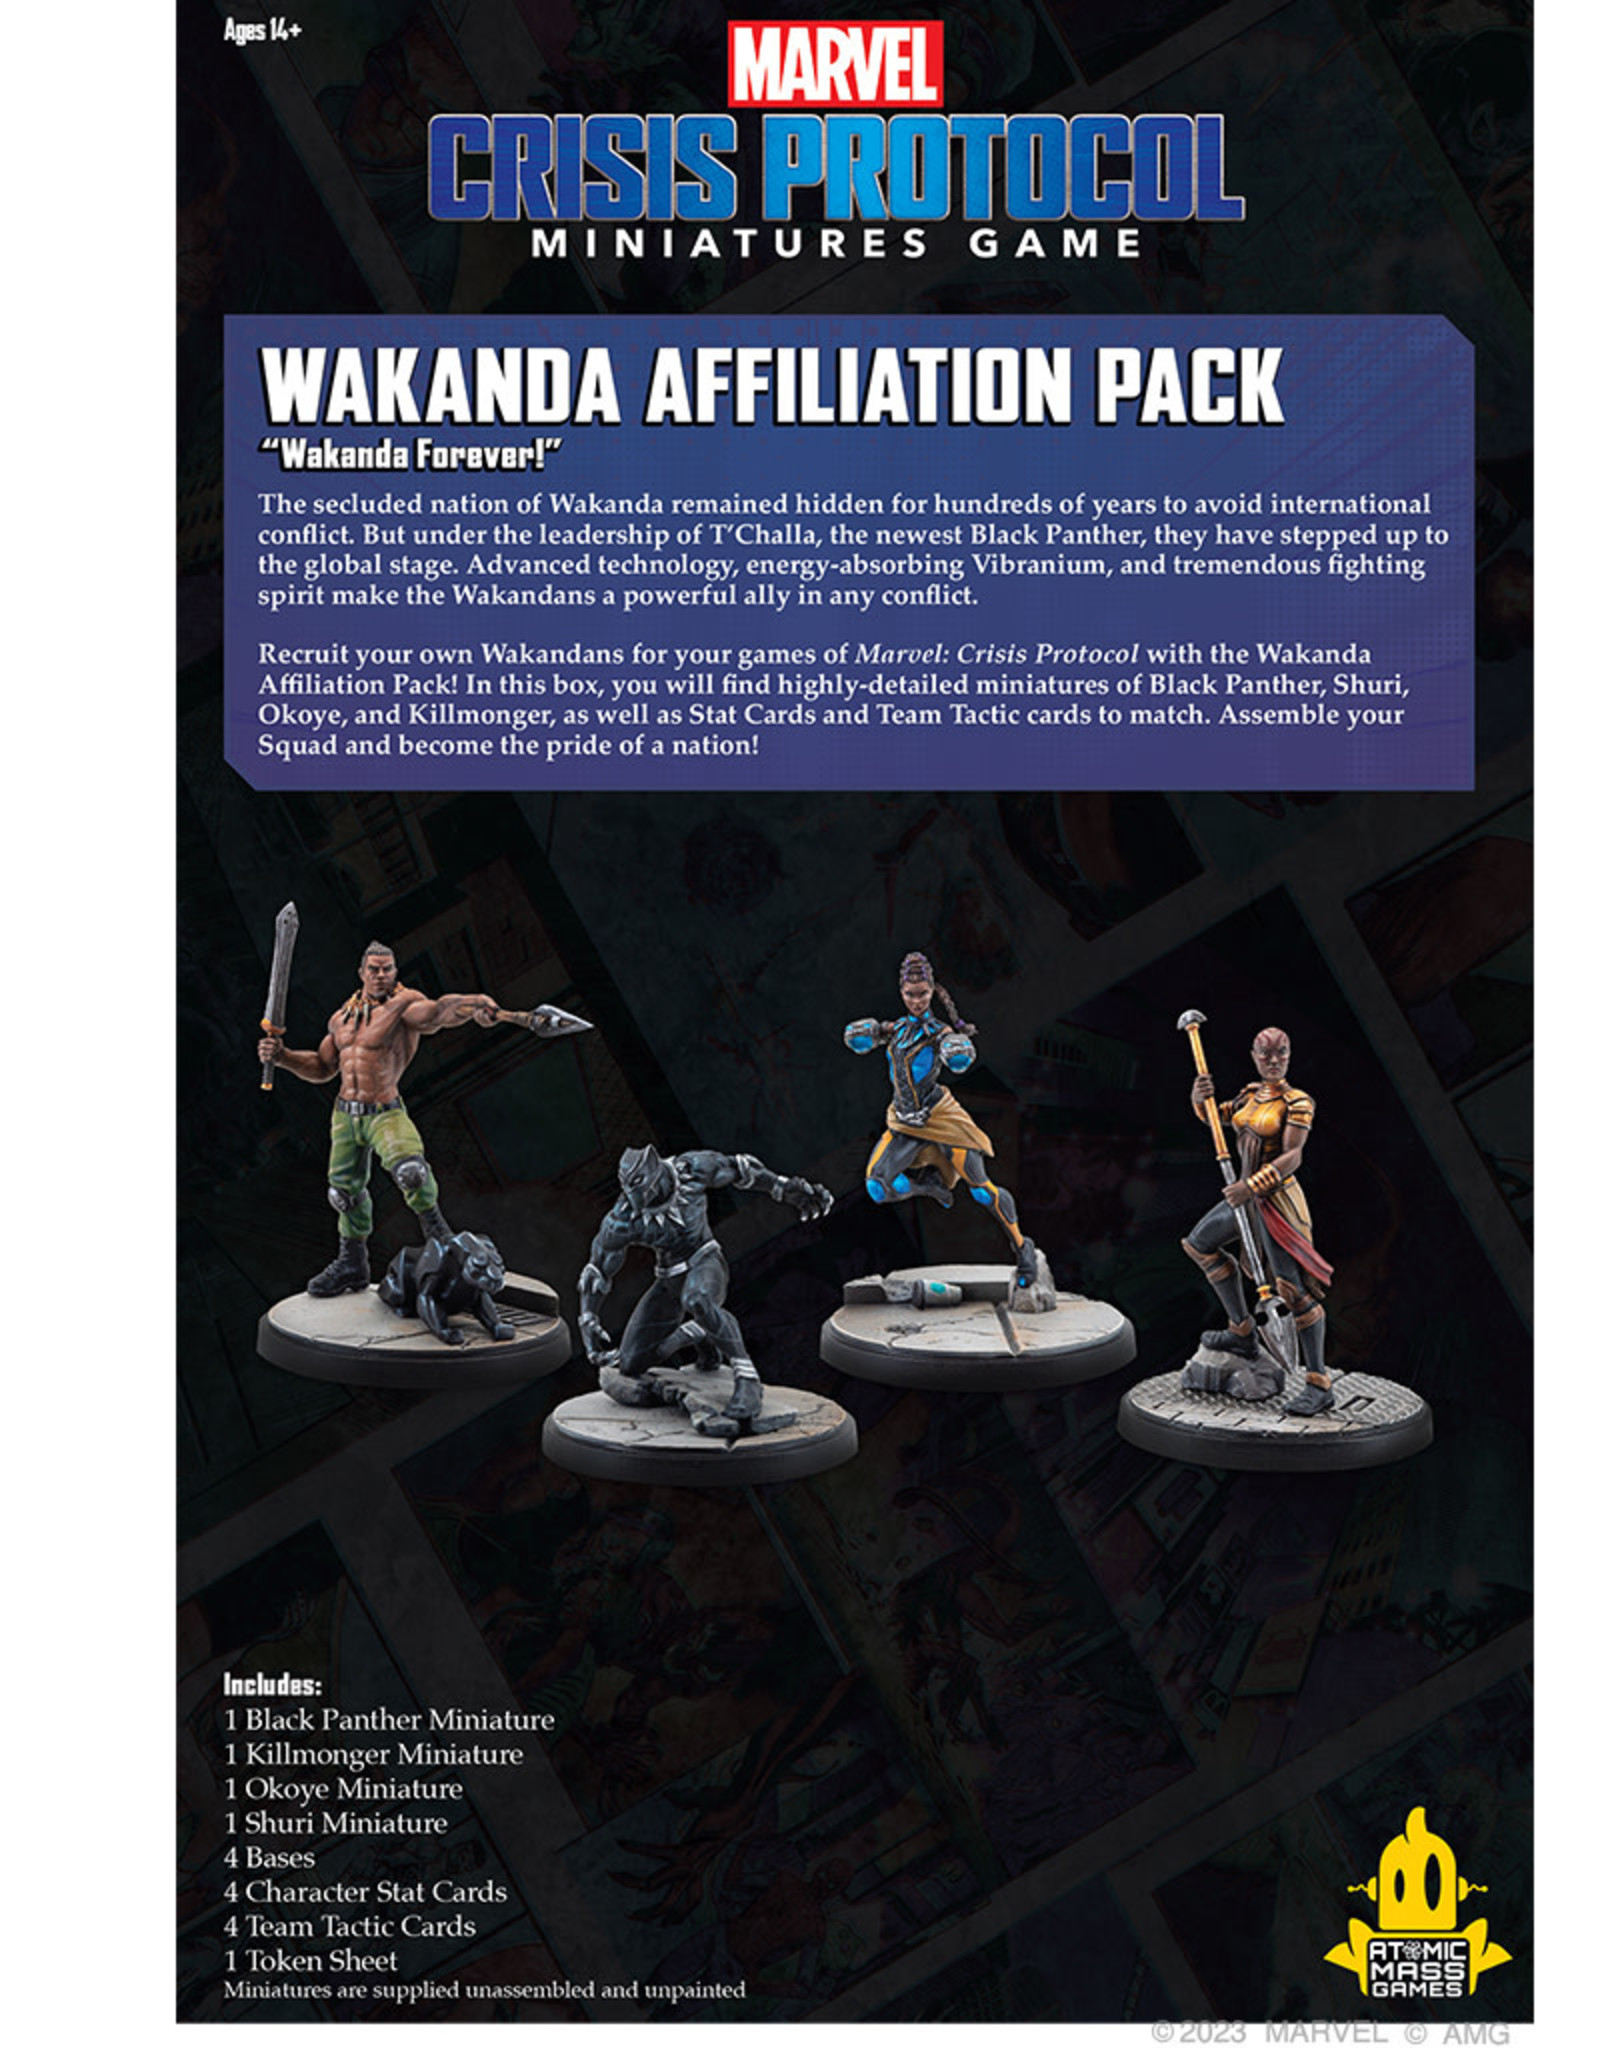 Atomic Mass Games Marvel Crisis Protocol: Affiliation Pack - Wakanda